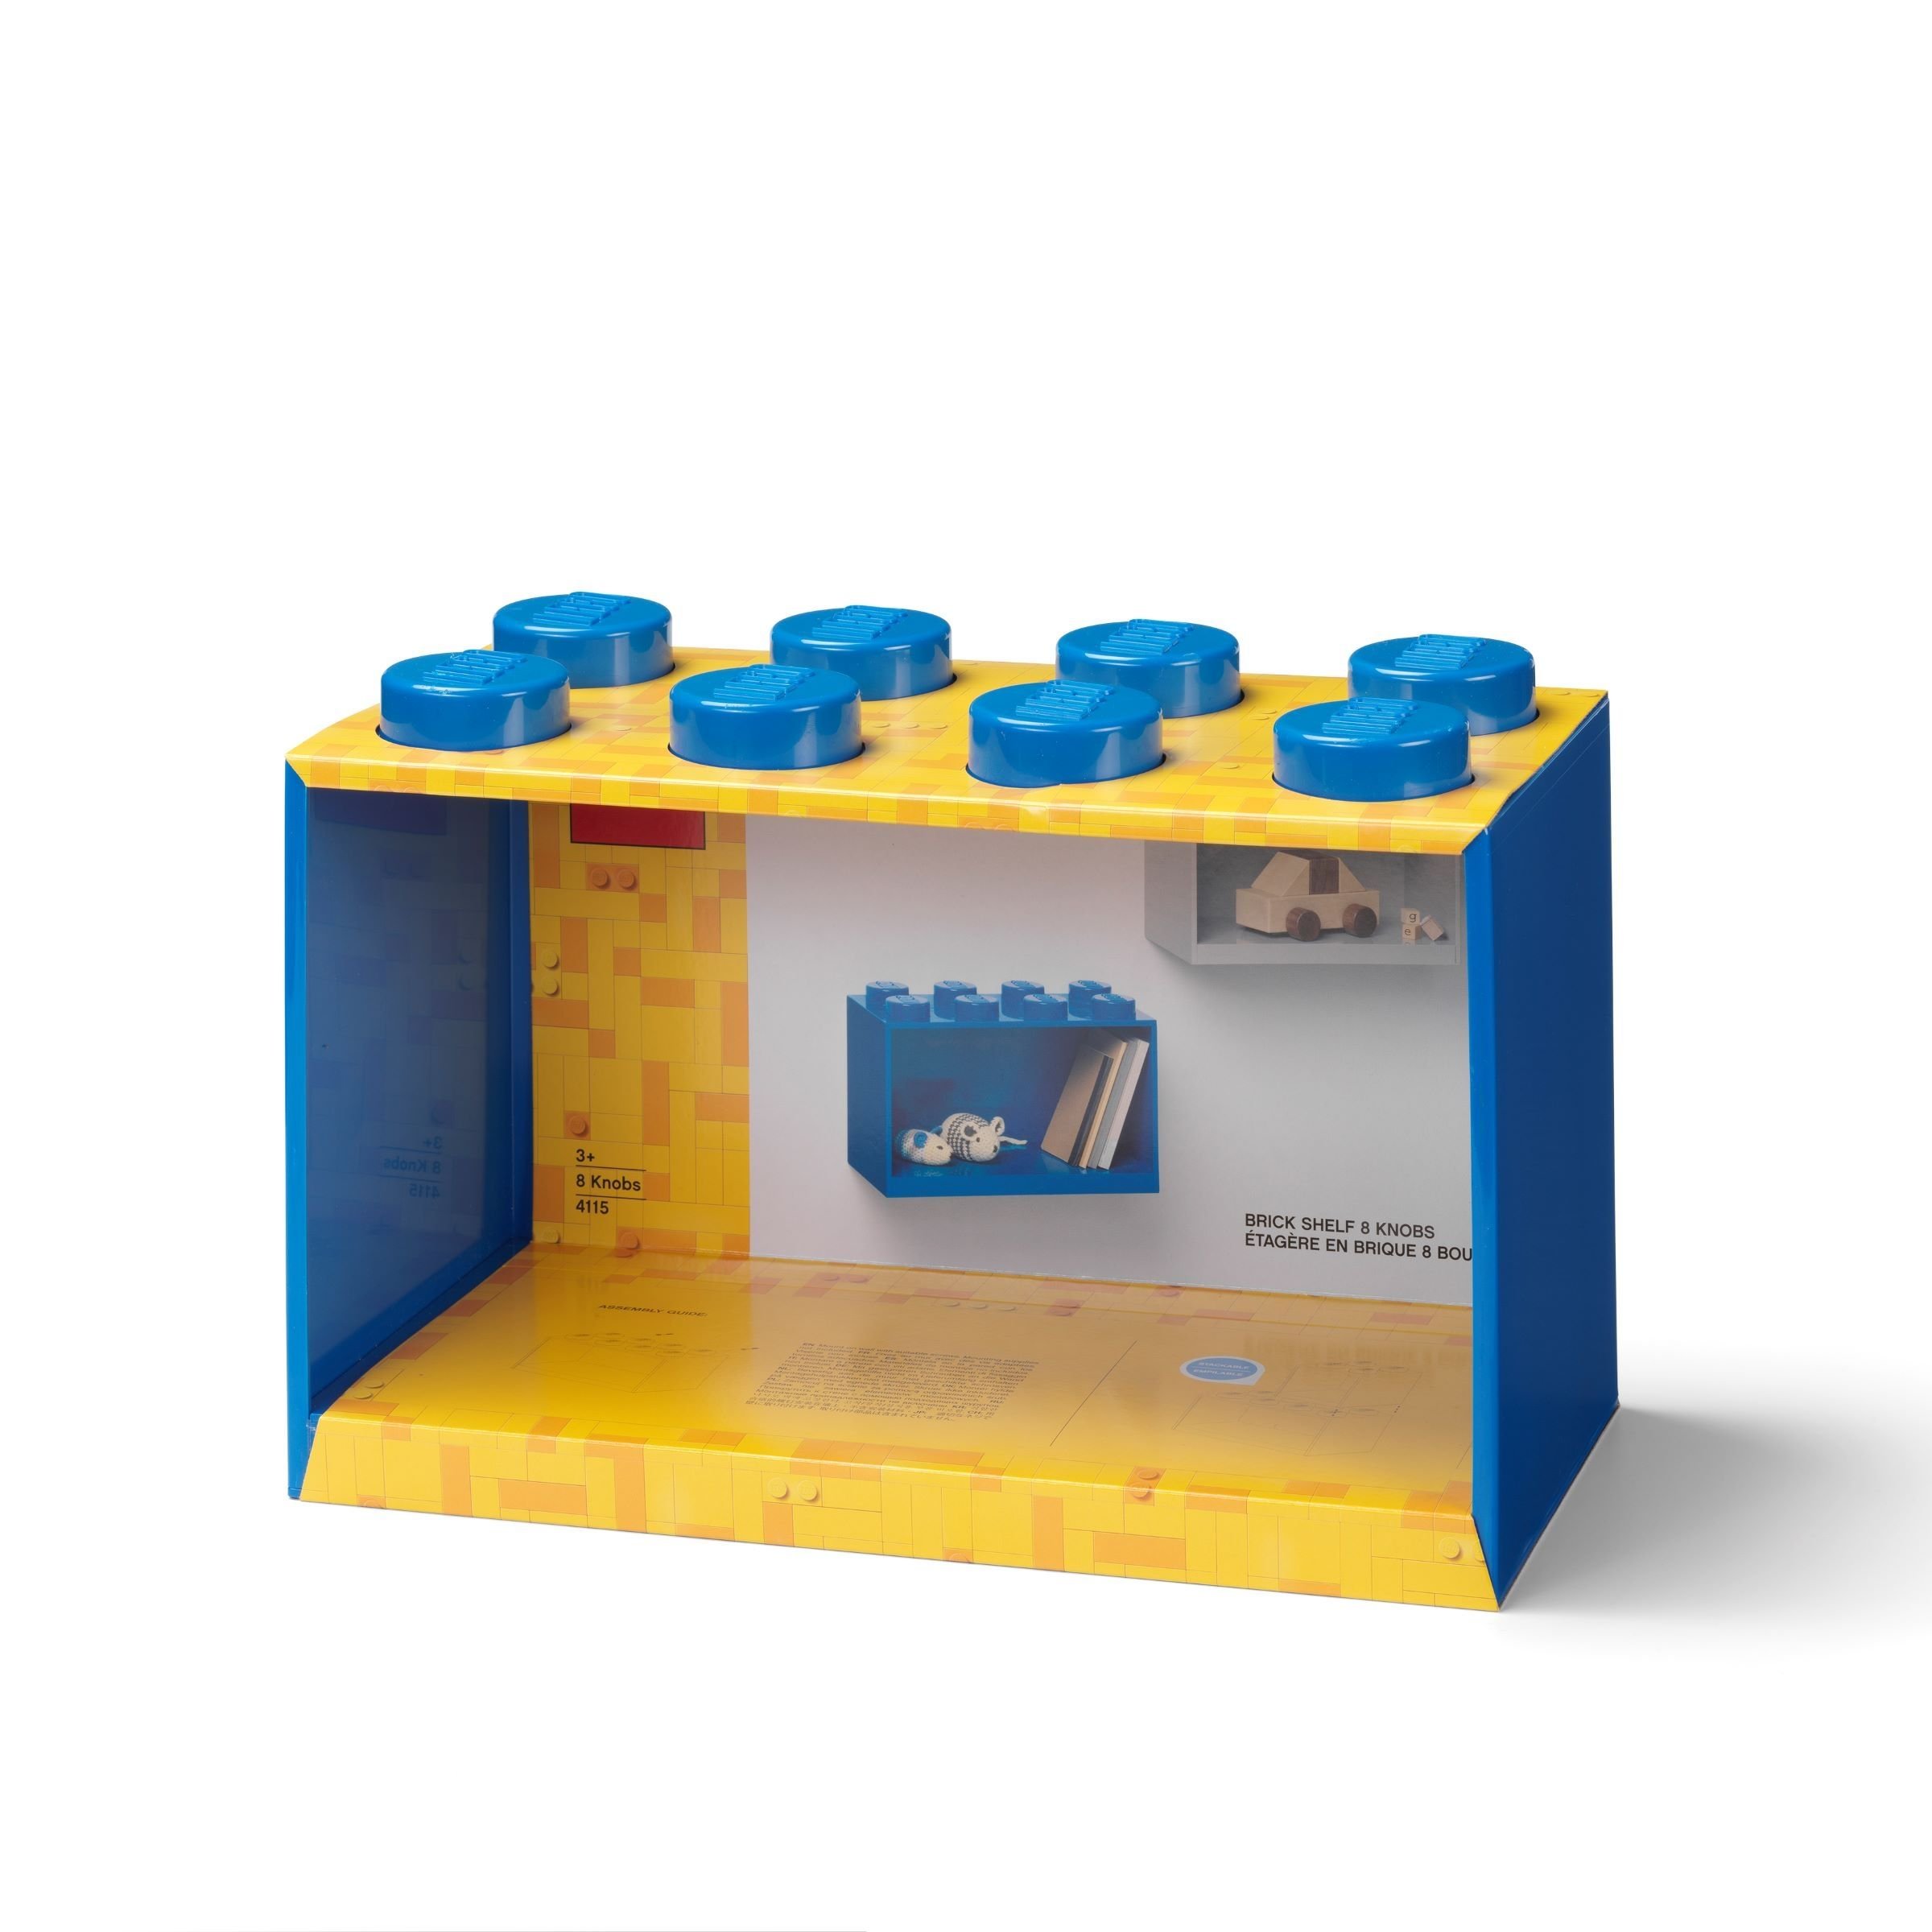 LEGO Gear 5007285 Steinregal mit 8 Noppen in Blau LEGO_5007285_alt2.jpg